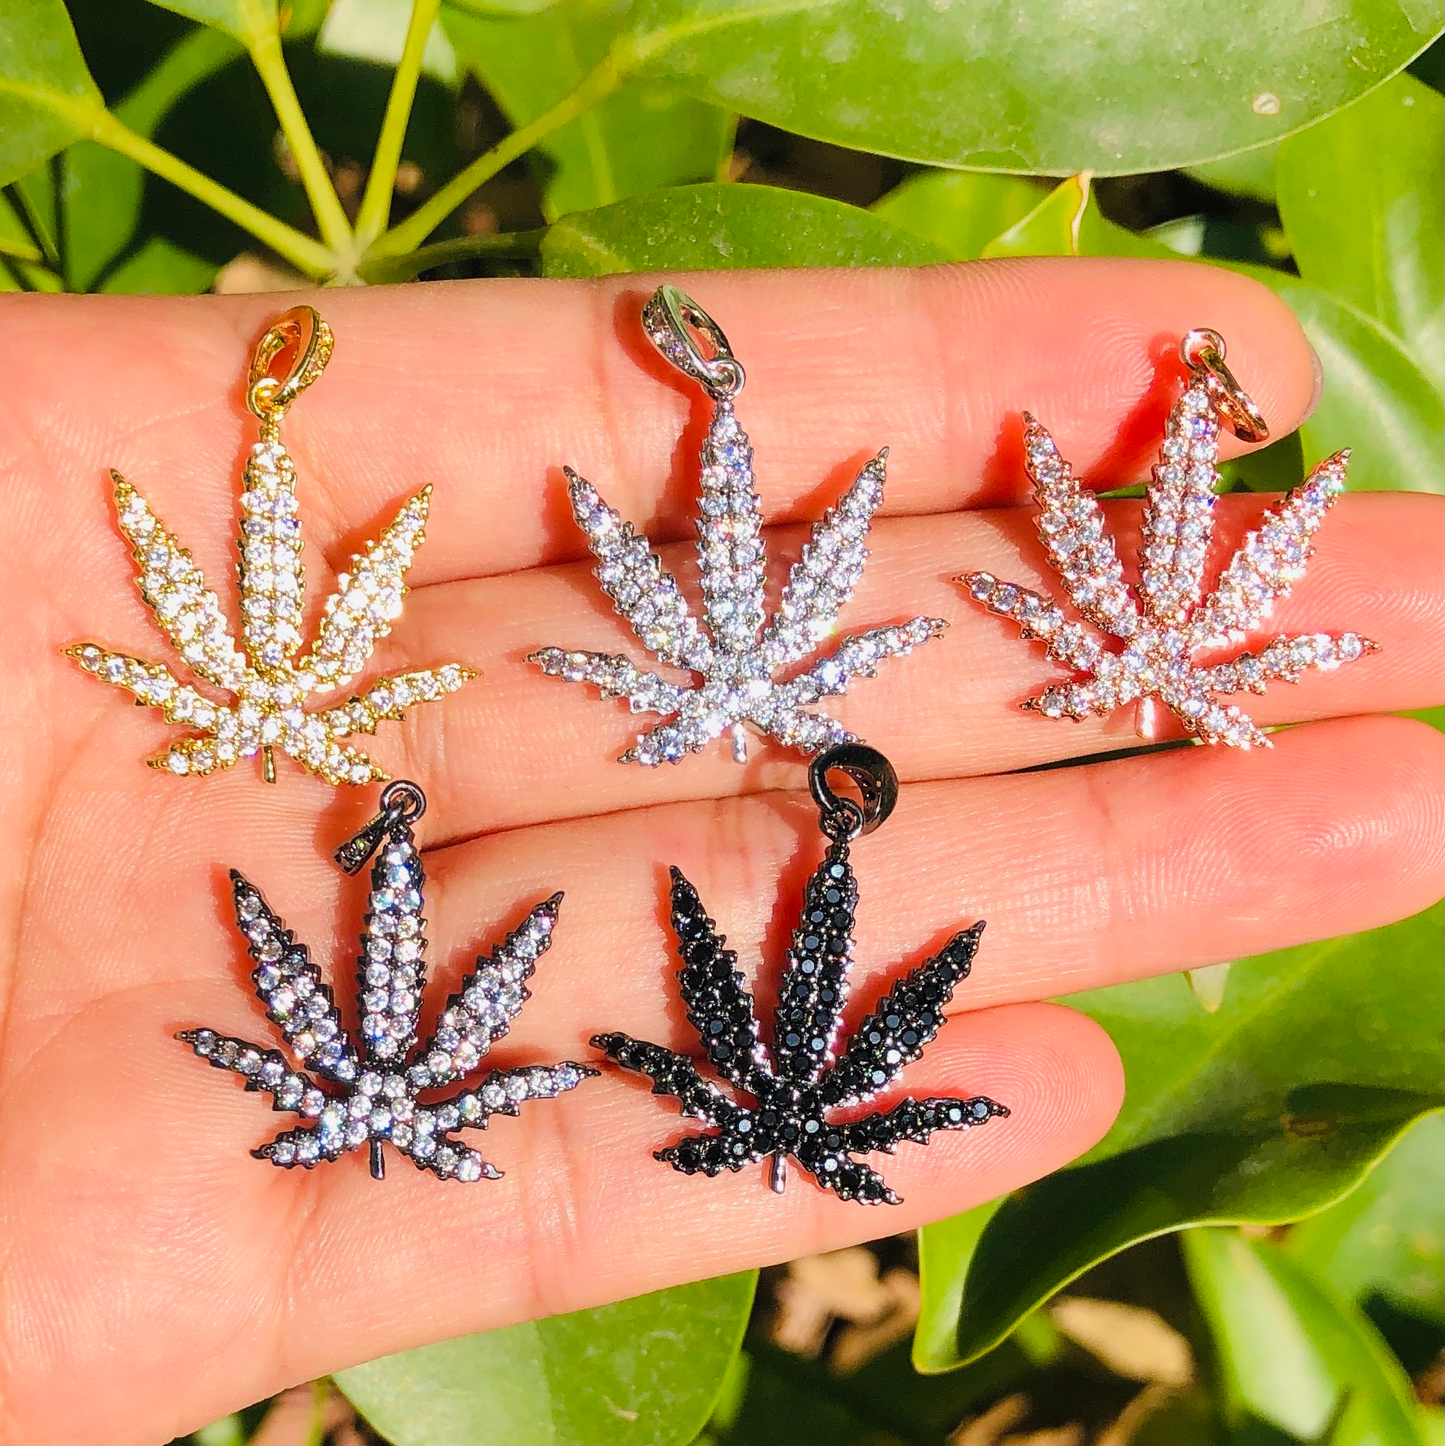 10pcs/lot 25*21.5mm CZ Paved Cannabis Leaf Plant Charms Mix Colors CZ Paved Charms Flowers Charms Beads Beyond